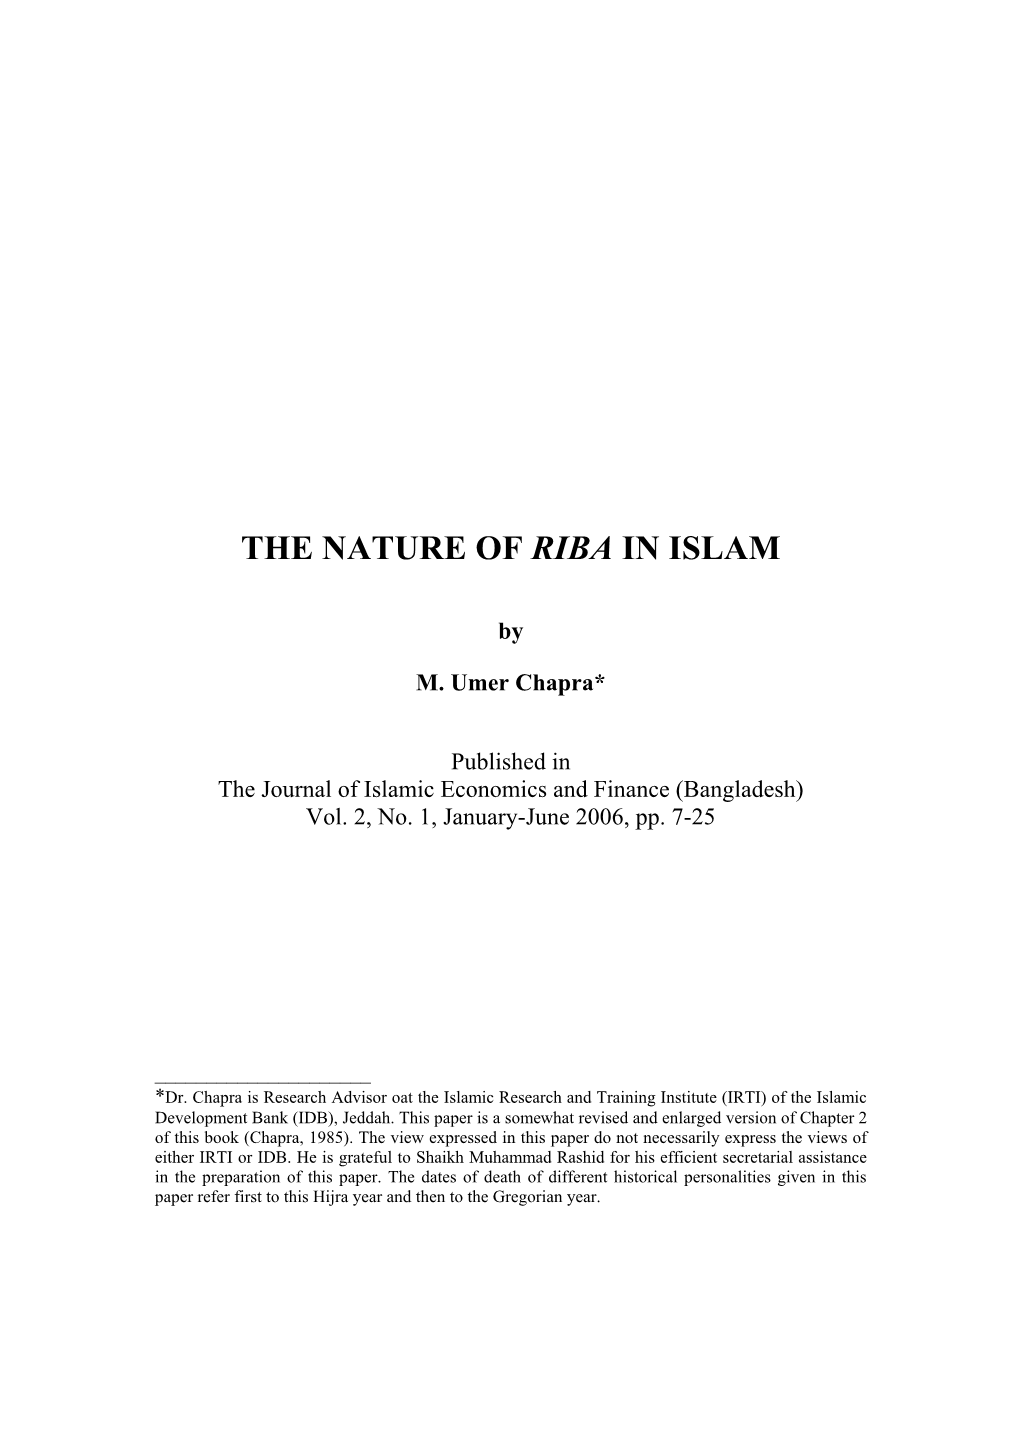 The Nature of Riba in Islam